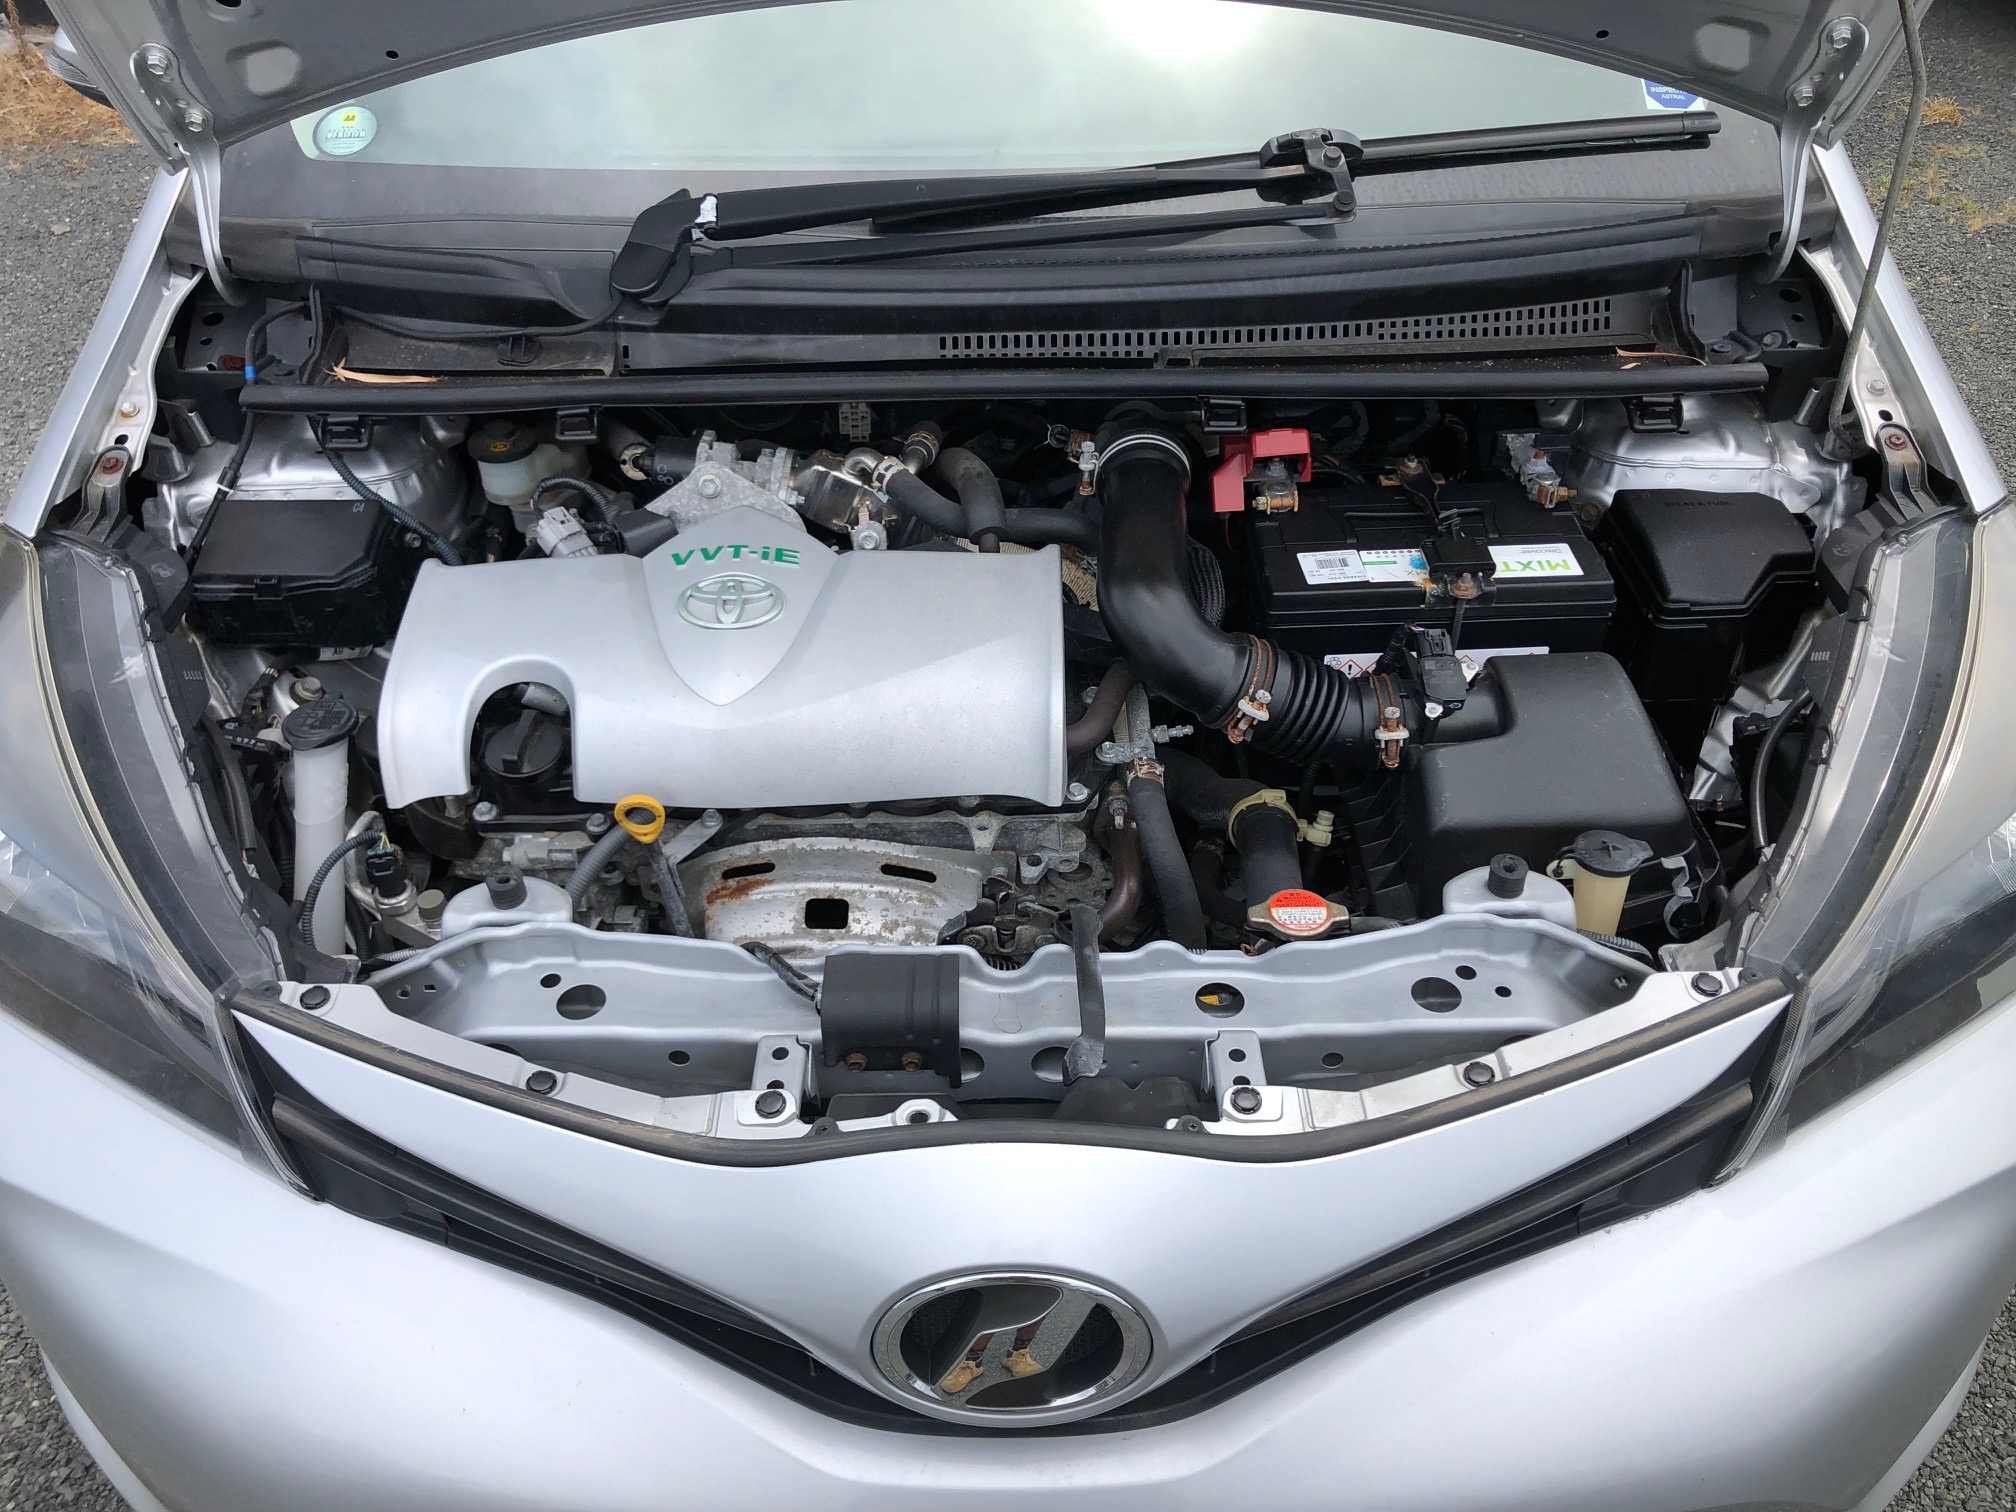 Toyota Vitz 2015 Image 7